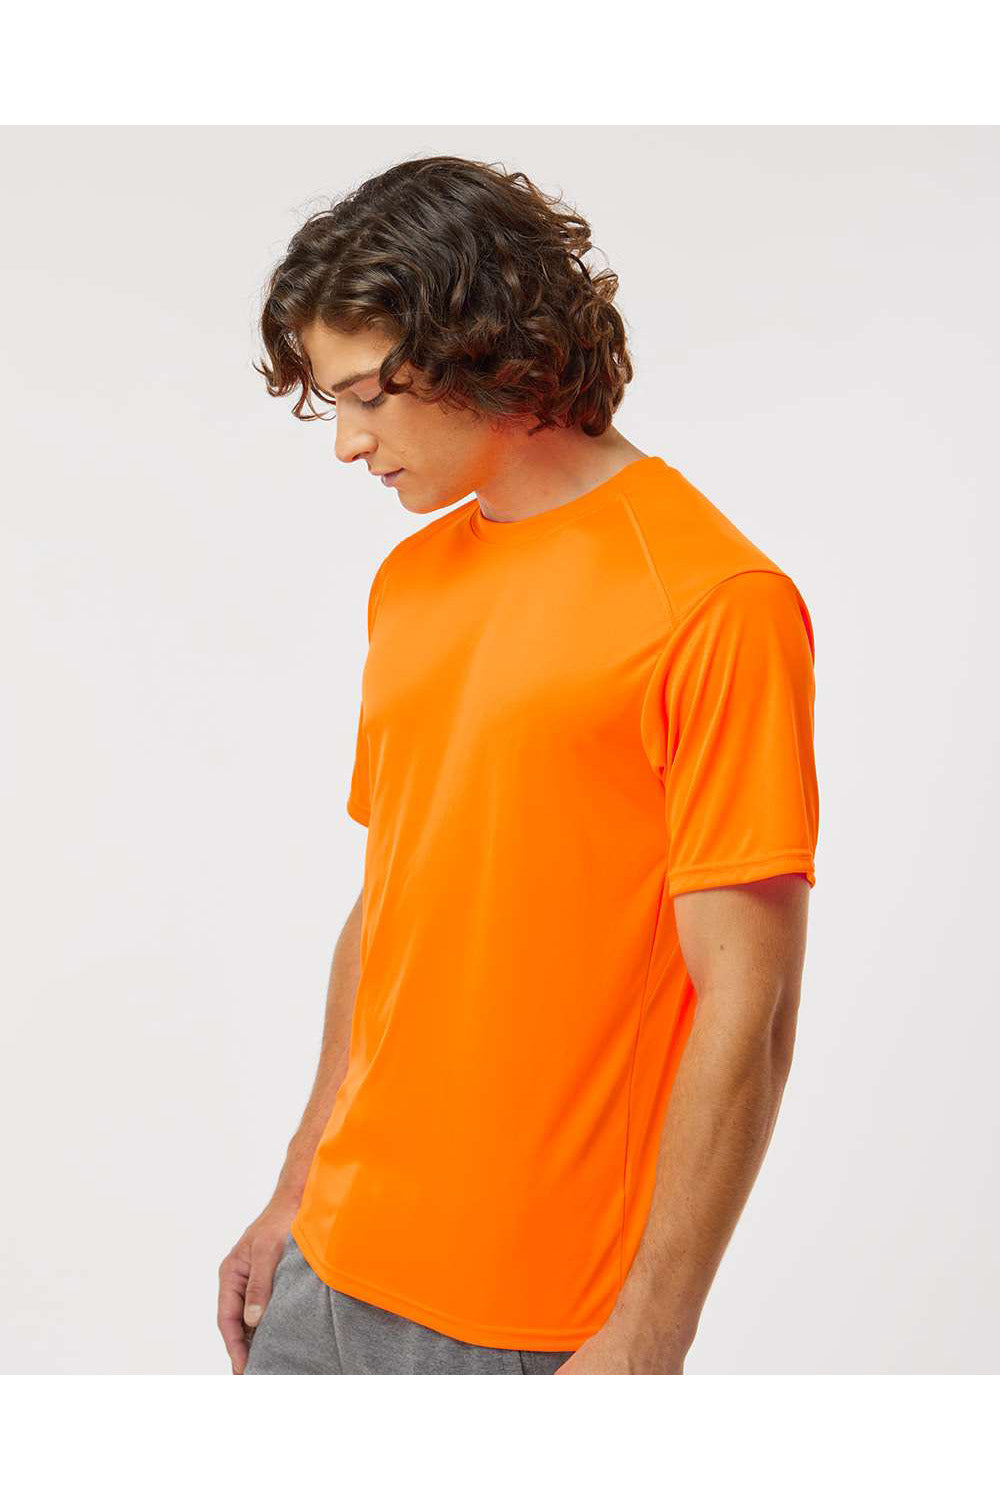 Paragon 200 Mens Islander Performance Short Sleeve Crewneck T-Shirt Neon Orange Model Side